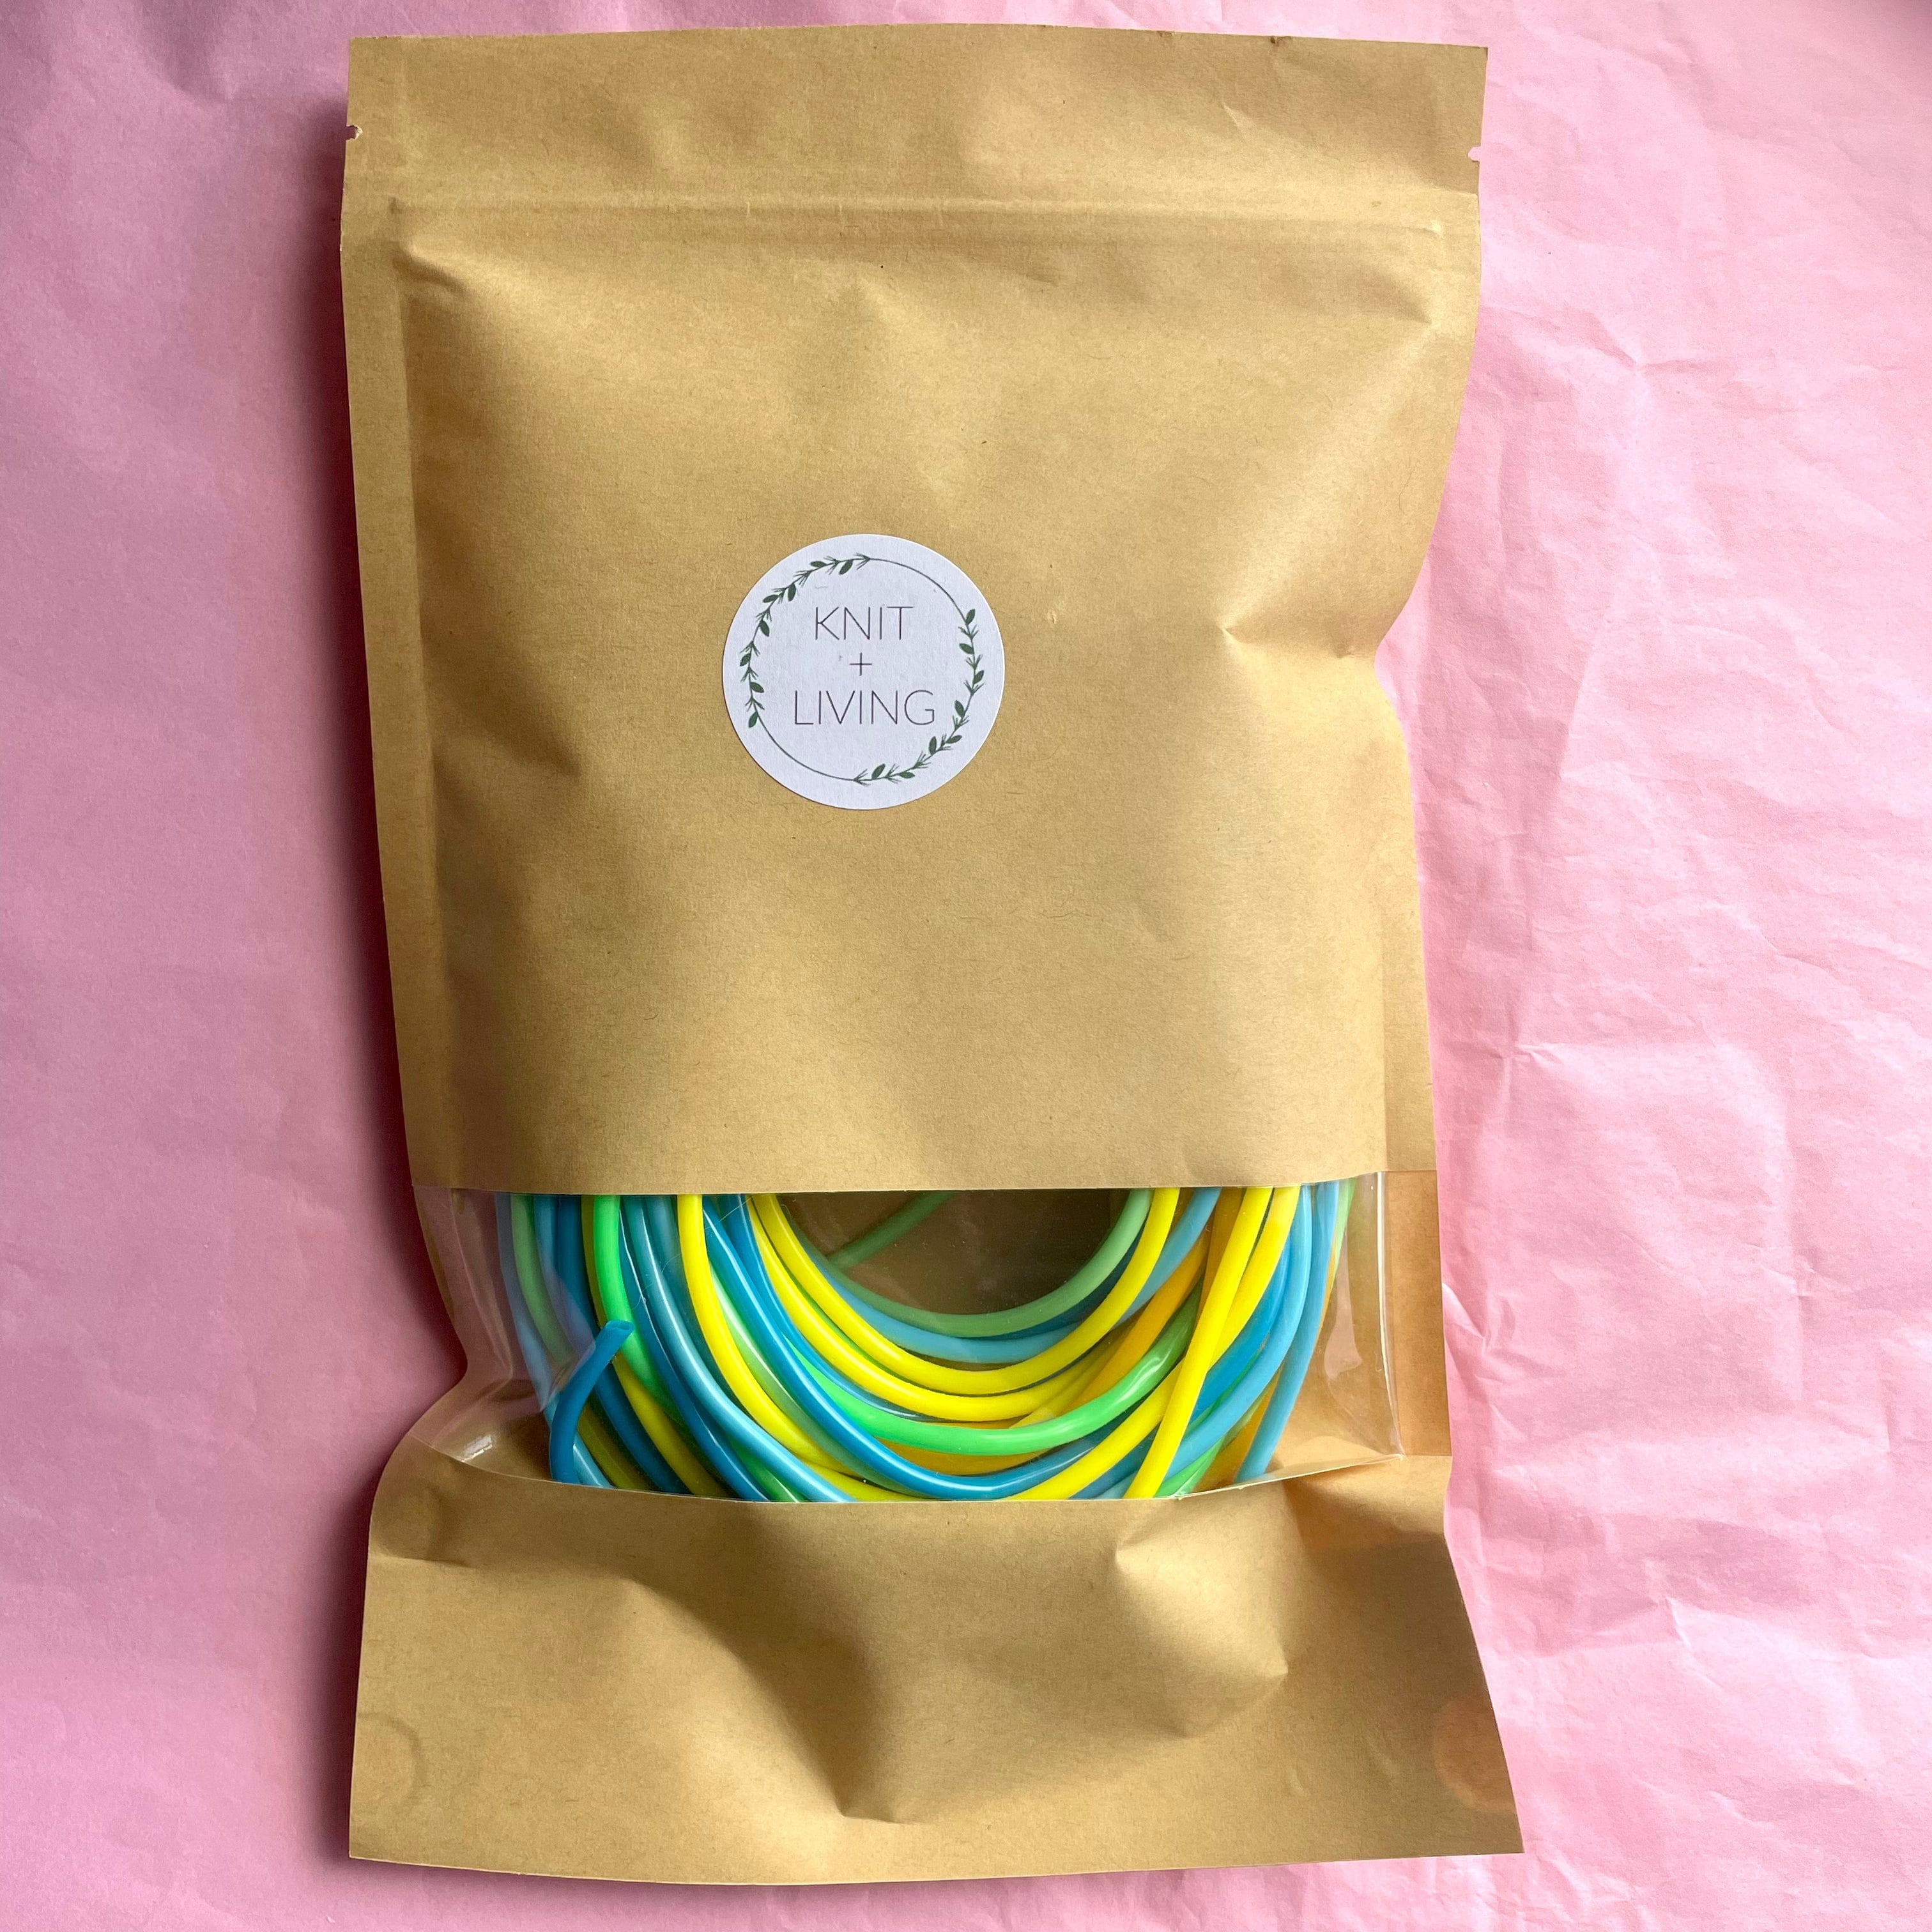 Flexible Stitch Holders/ Stitch Wire Packs